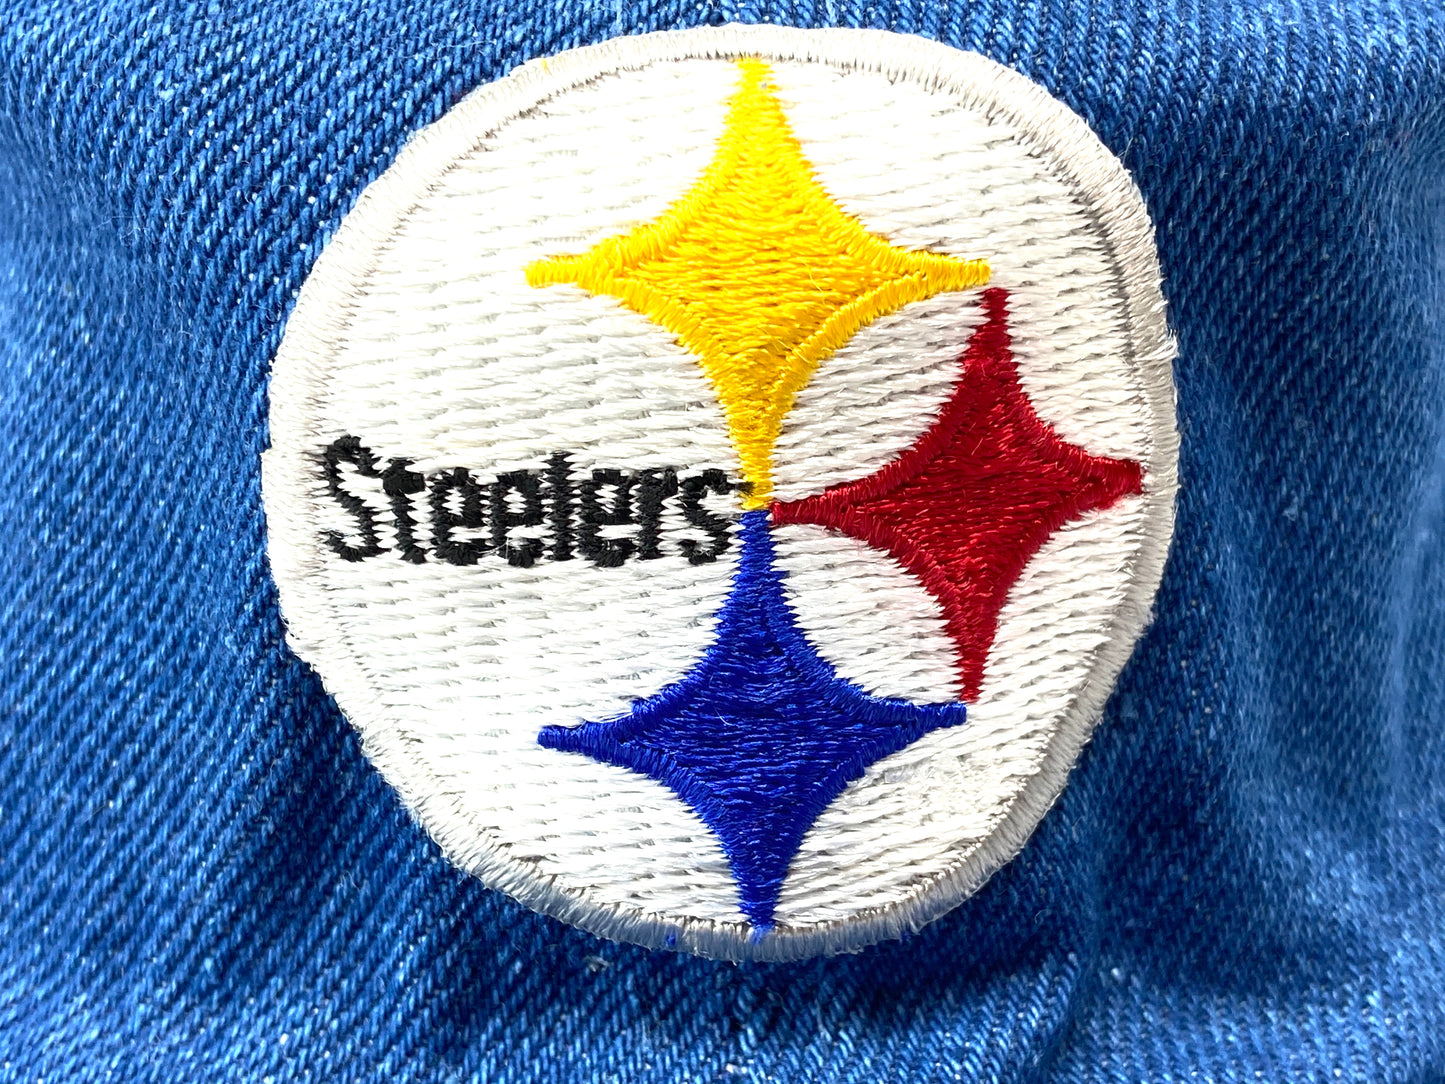 Pittsburgh Steelers Vintage NFL Denim Toddler Cap NOS by Drew Pearson Marketing